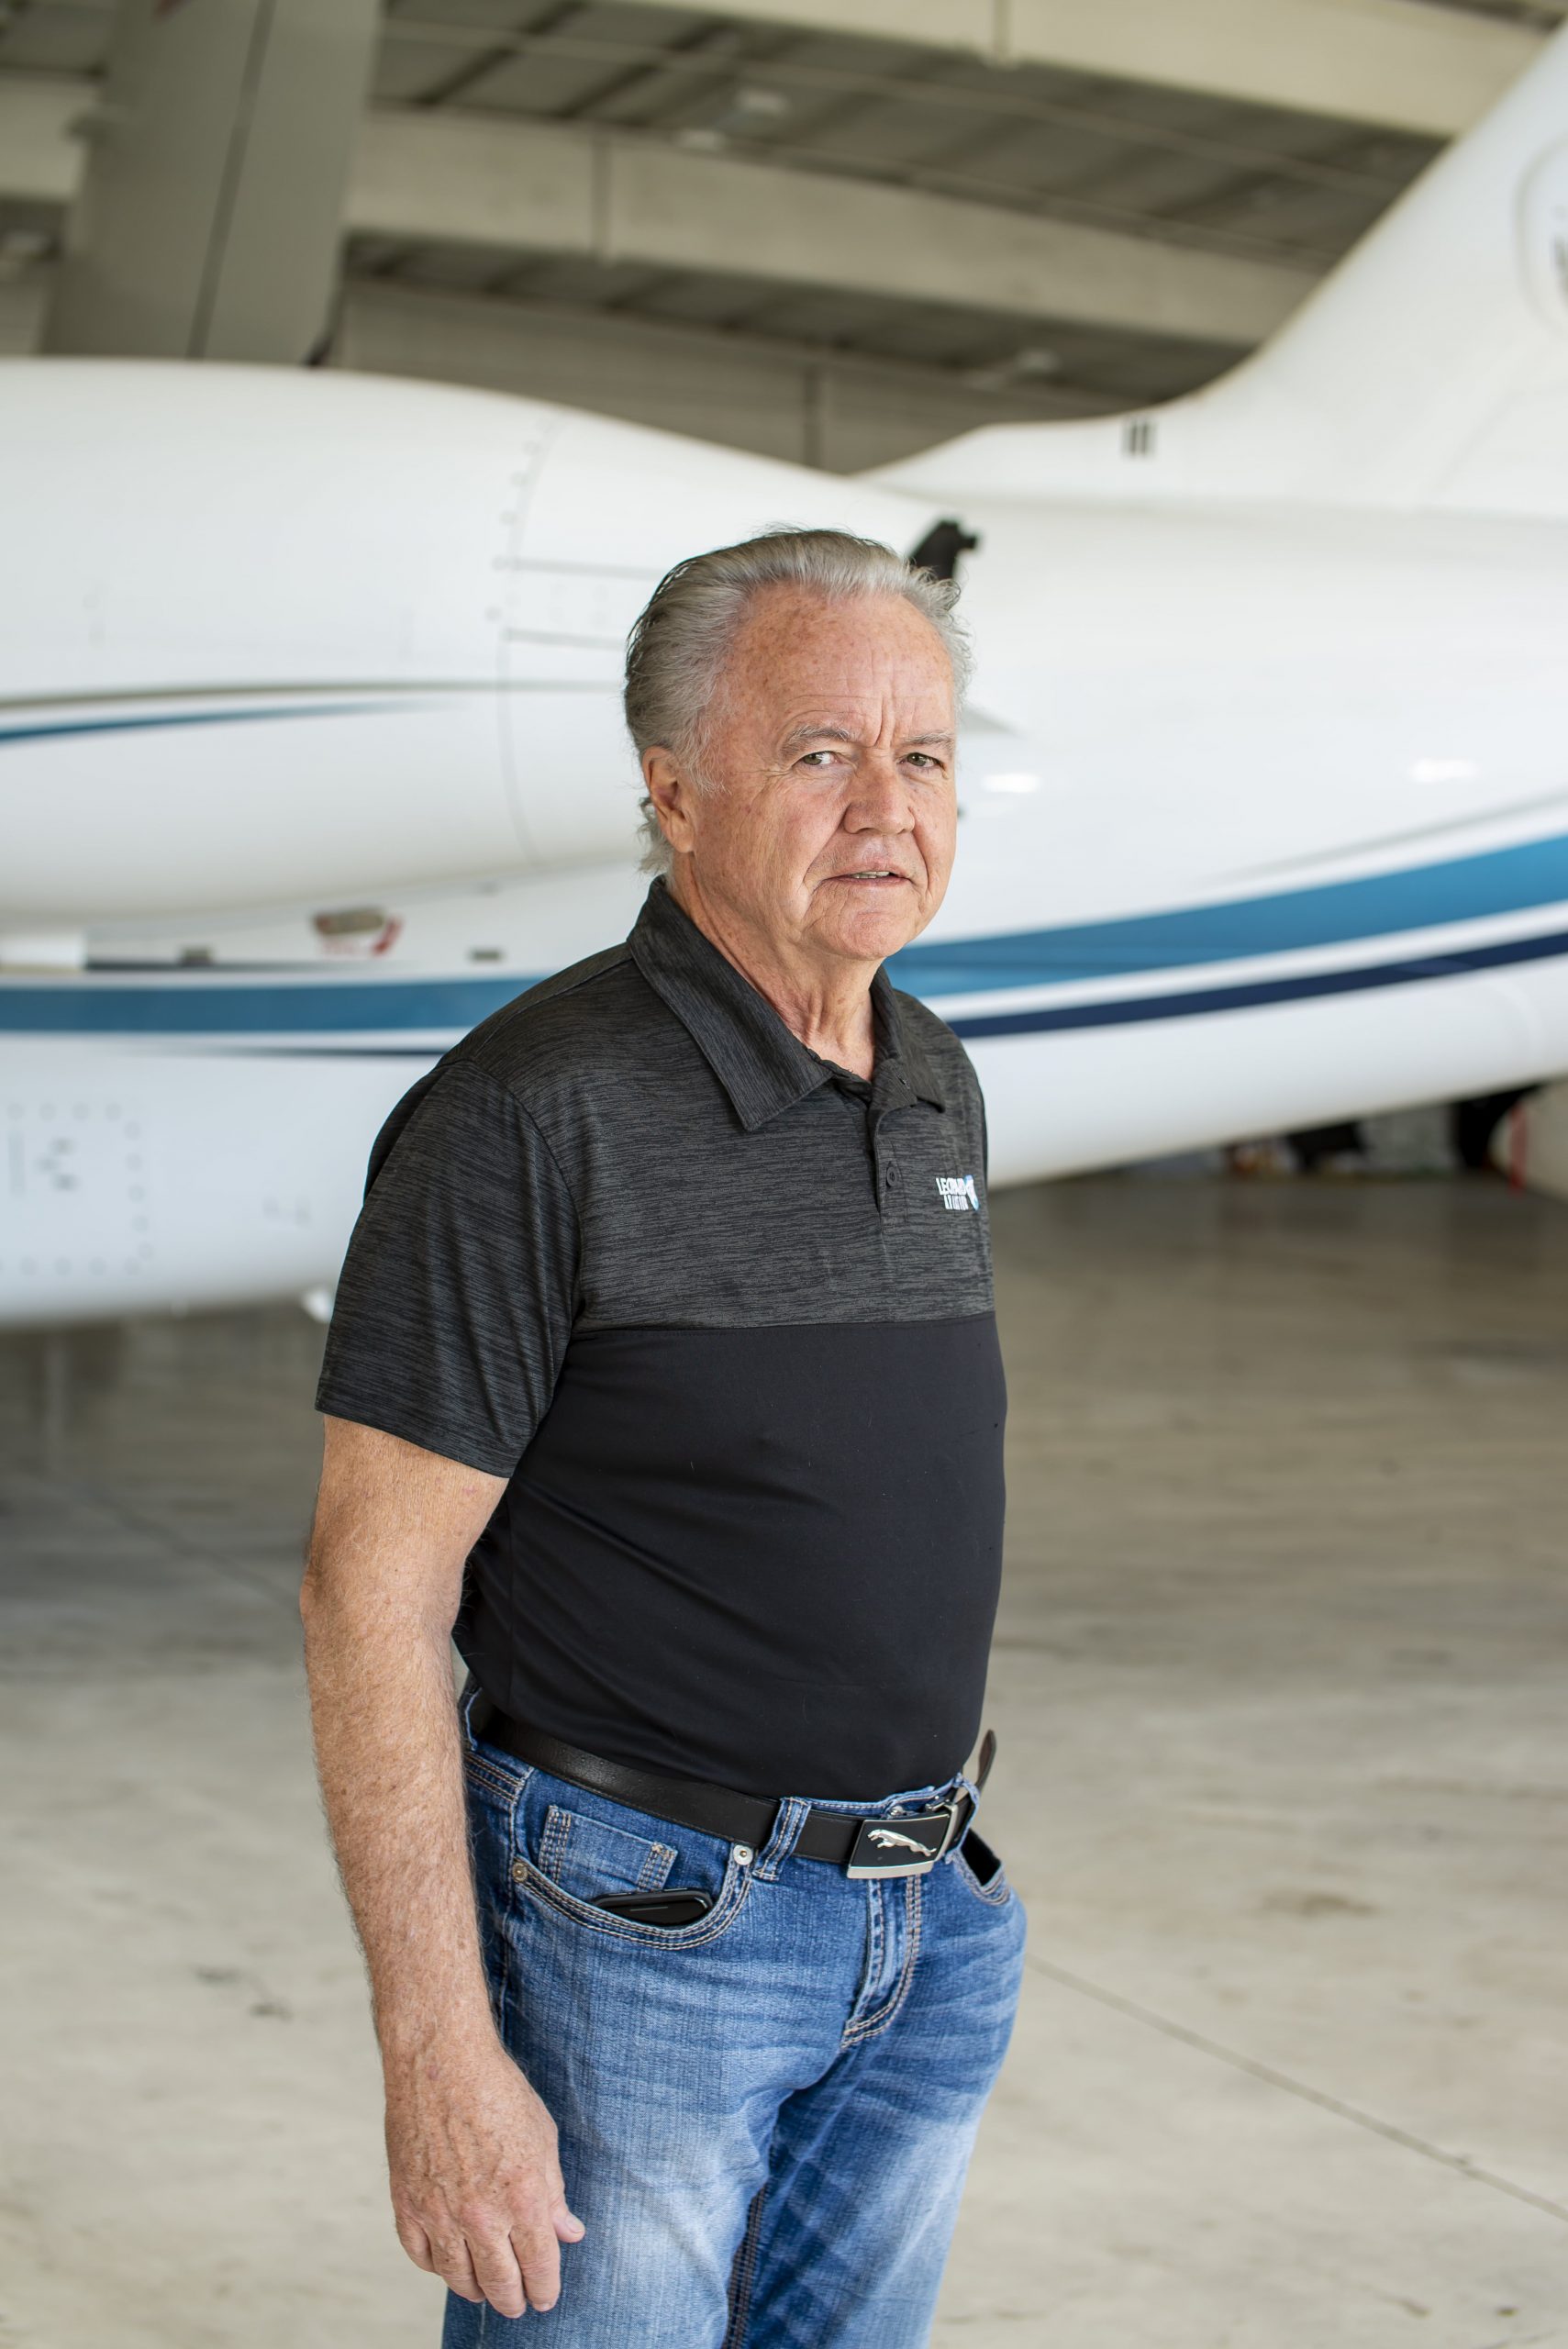 Leopard Aviation Founder, Tom Noon